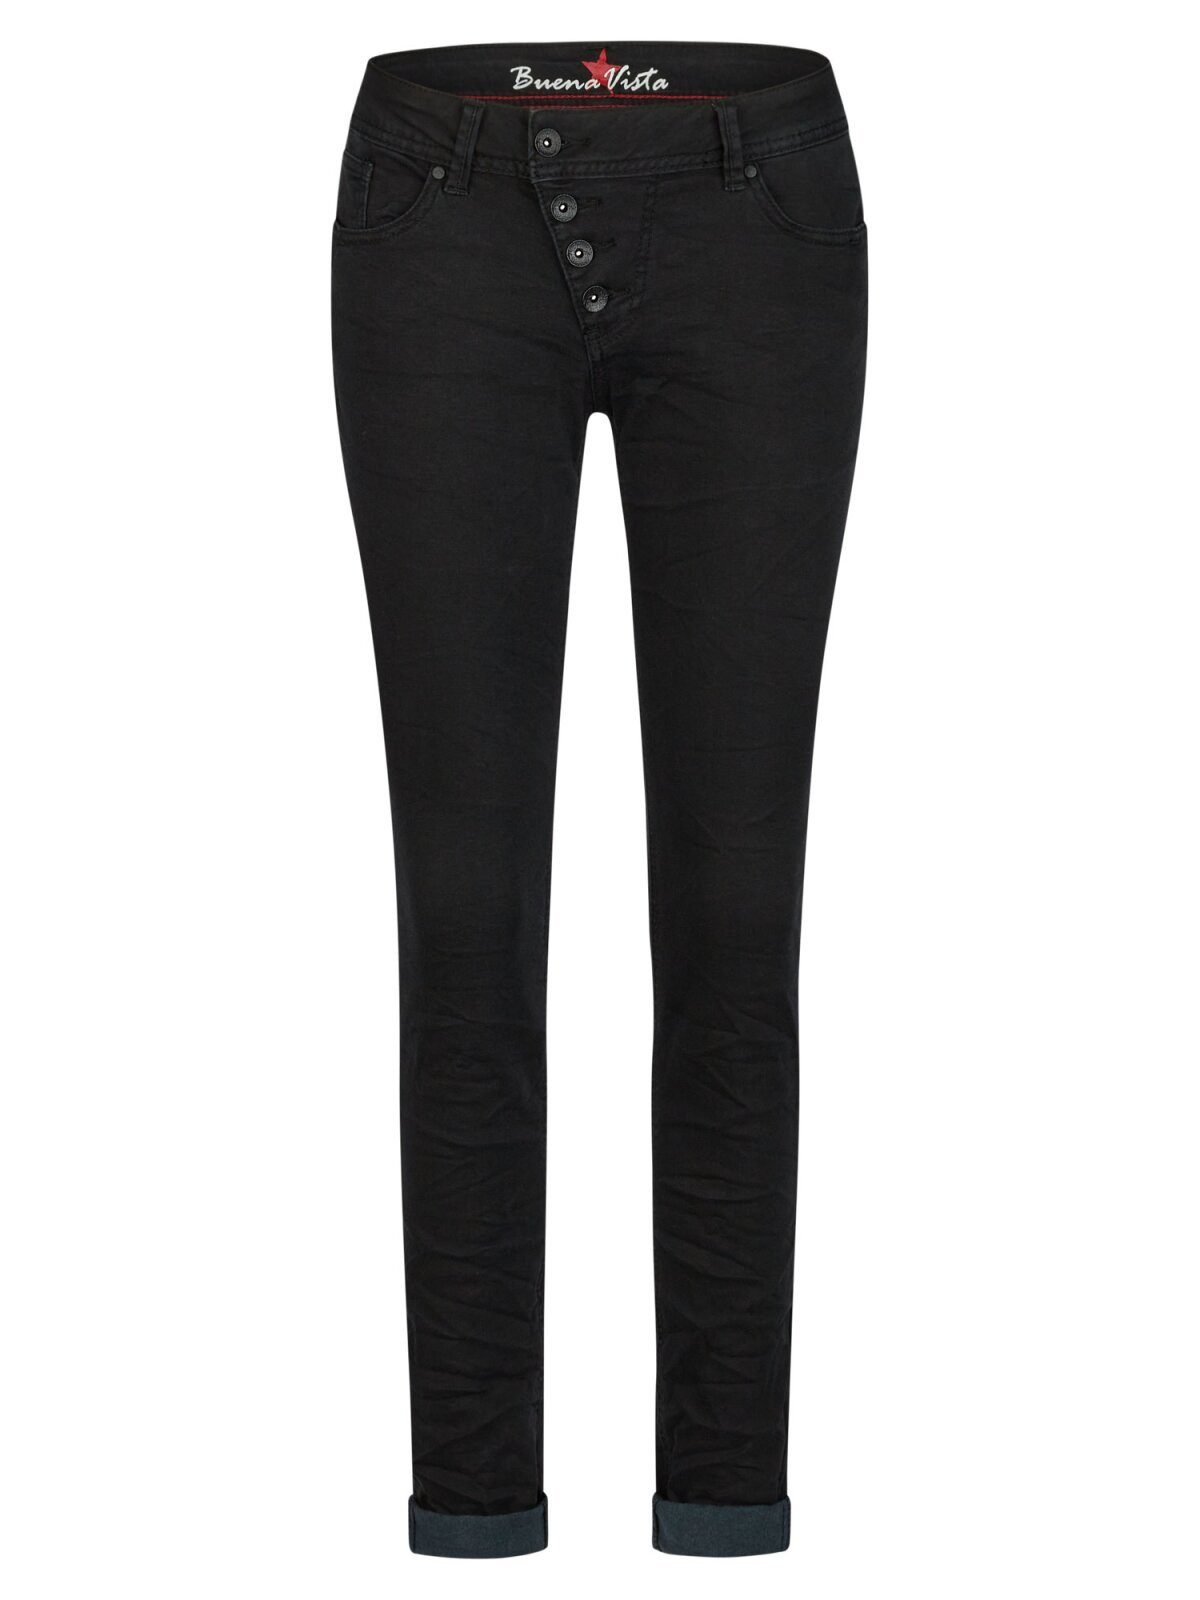 Buena Vista Stretch-Jeans BUENA VISTA MALIBU black 2310 B5001 699.014 - THERMO SOFT WARMING